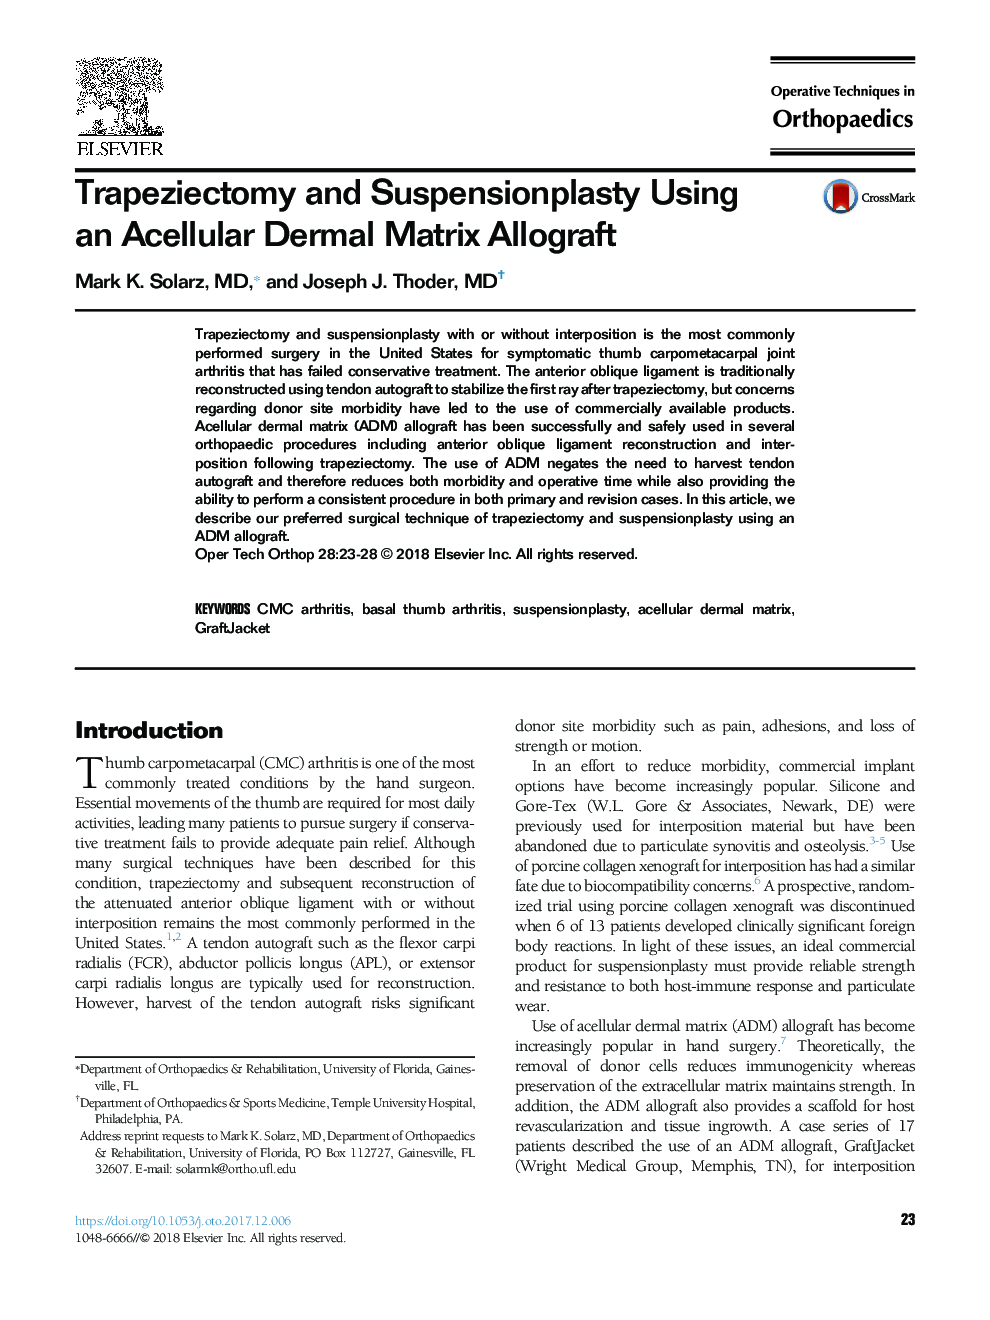 Trapeziectomy and Suspensionplasty Using an Acellular Dermal Matrix Allograft